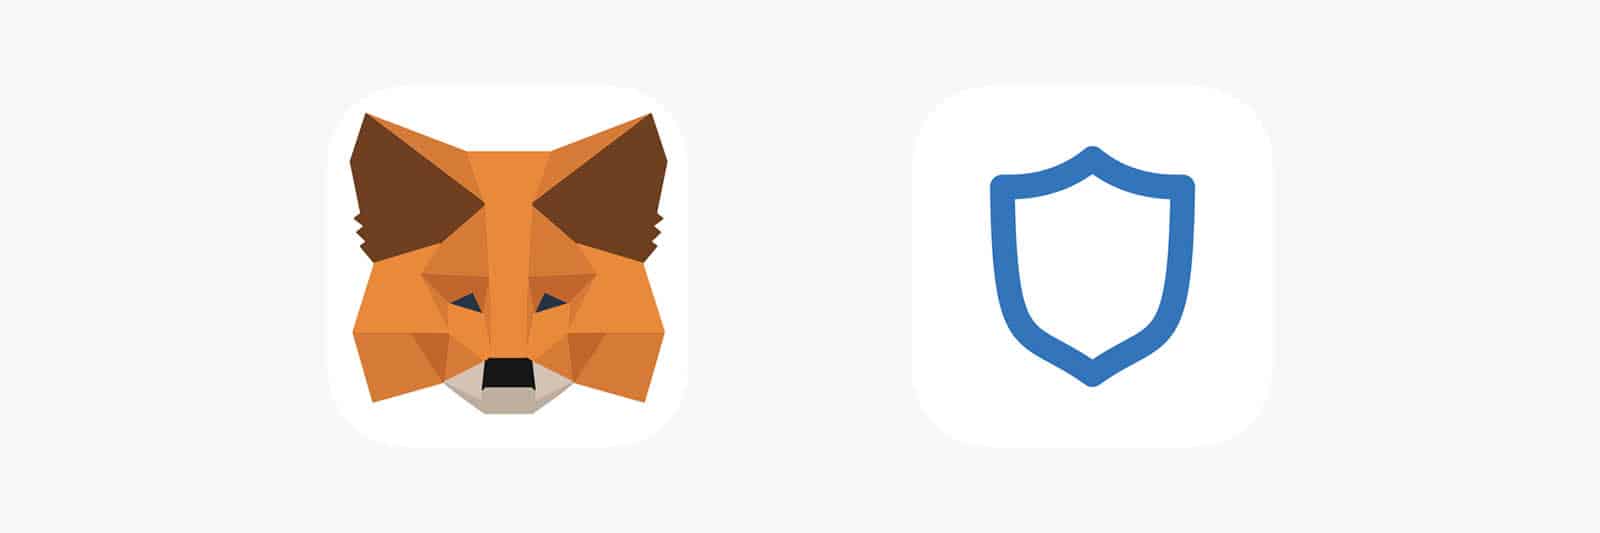 Логотипы Metamask и Trustwallet